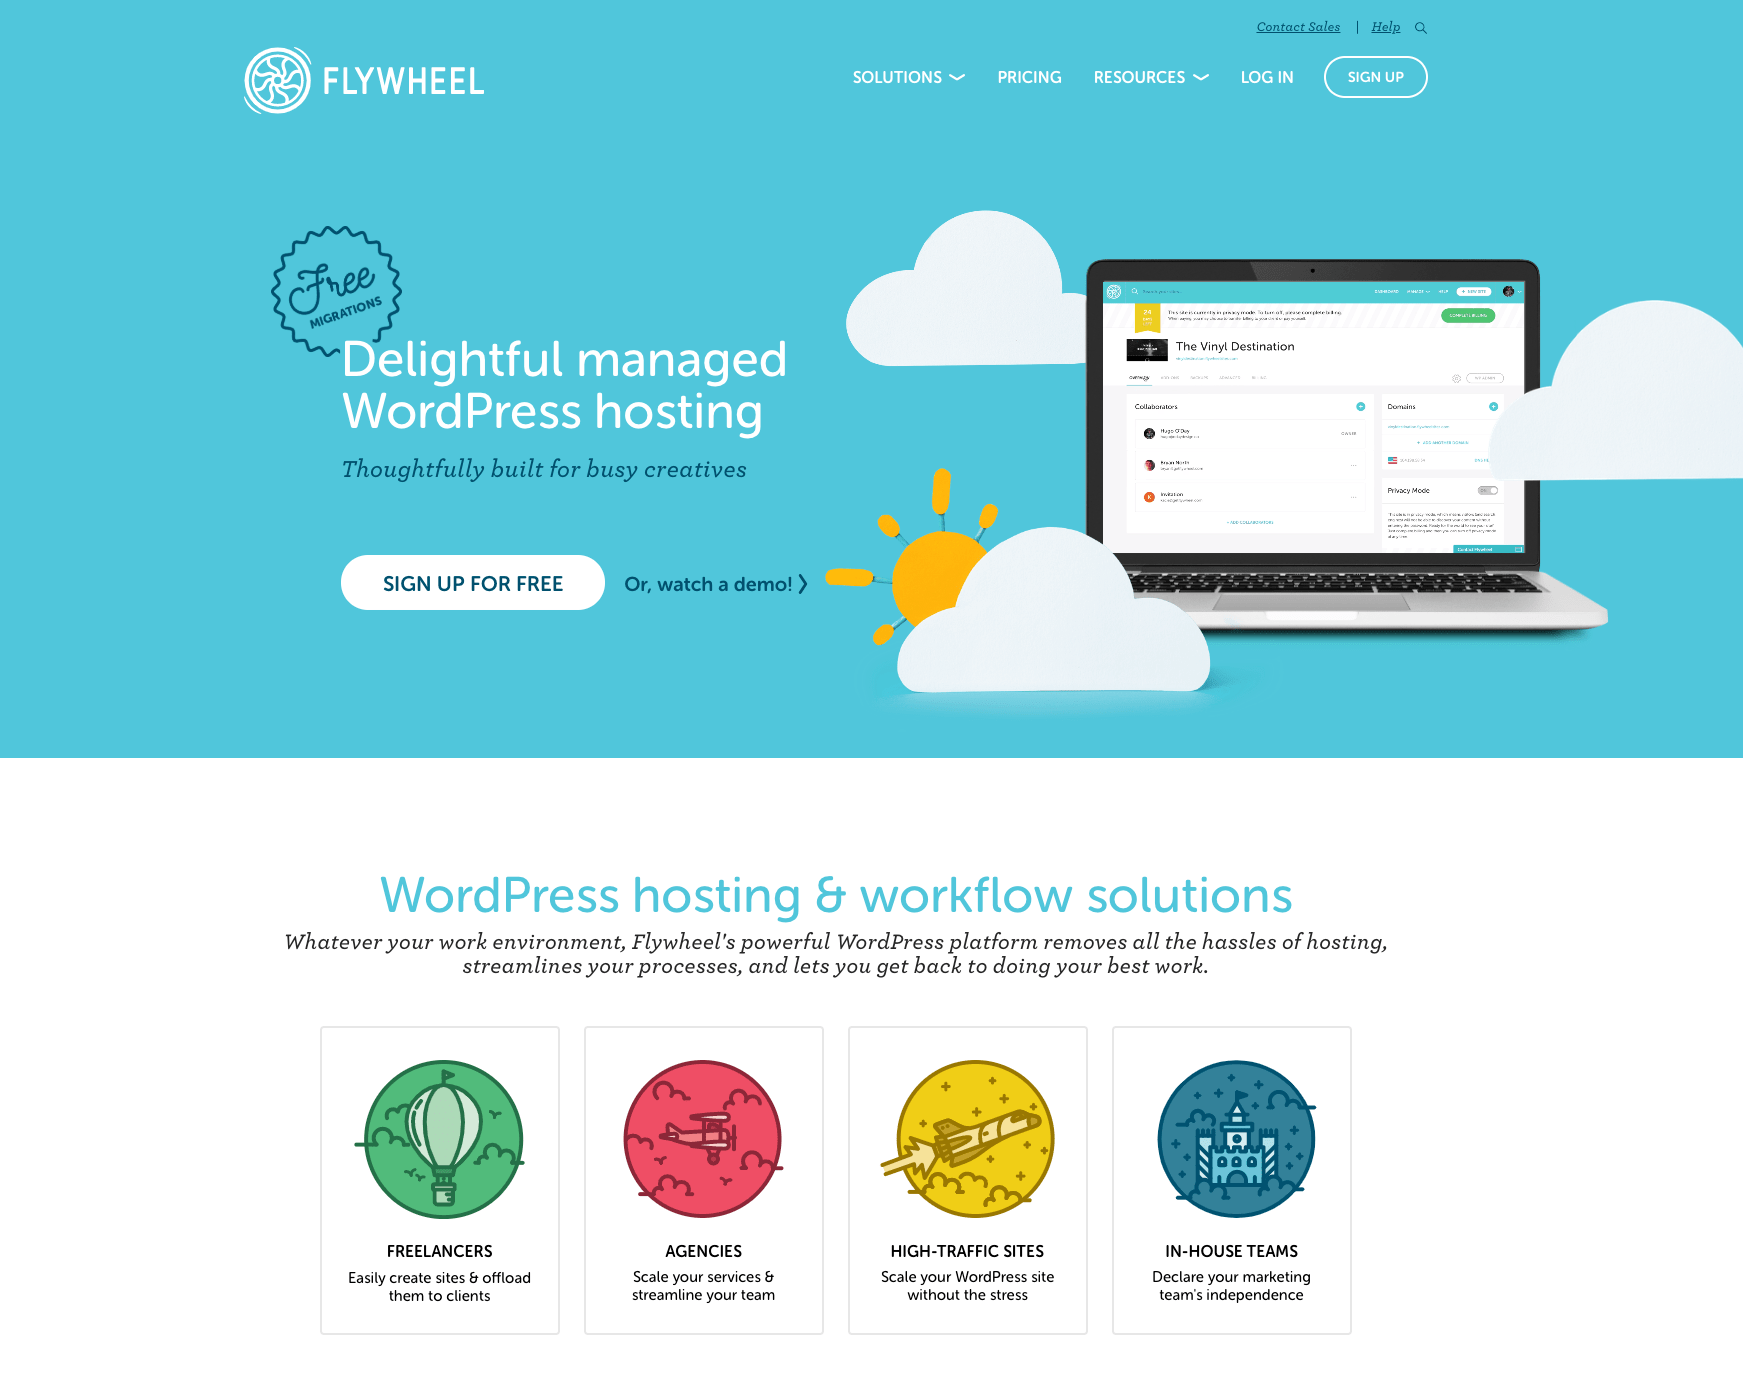 FlyWheel is the best Wordpress hosting company